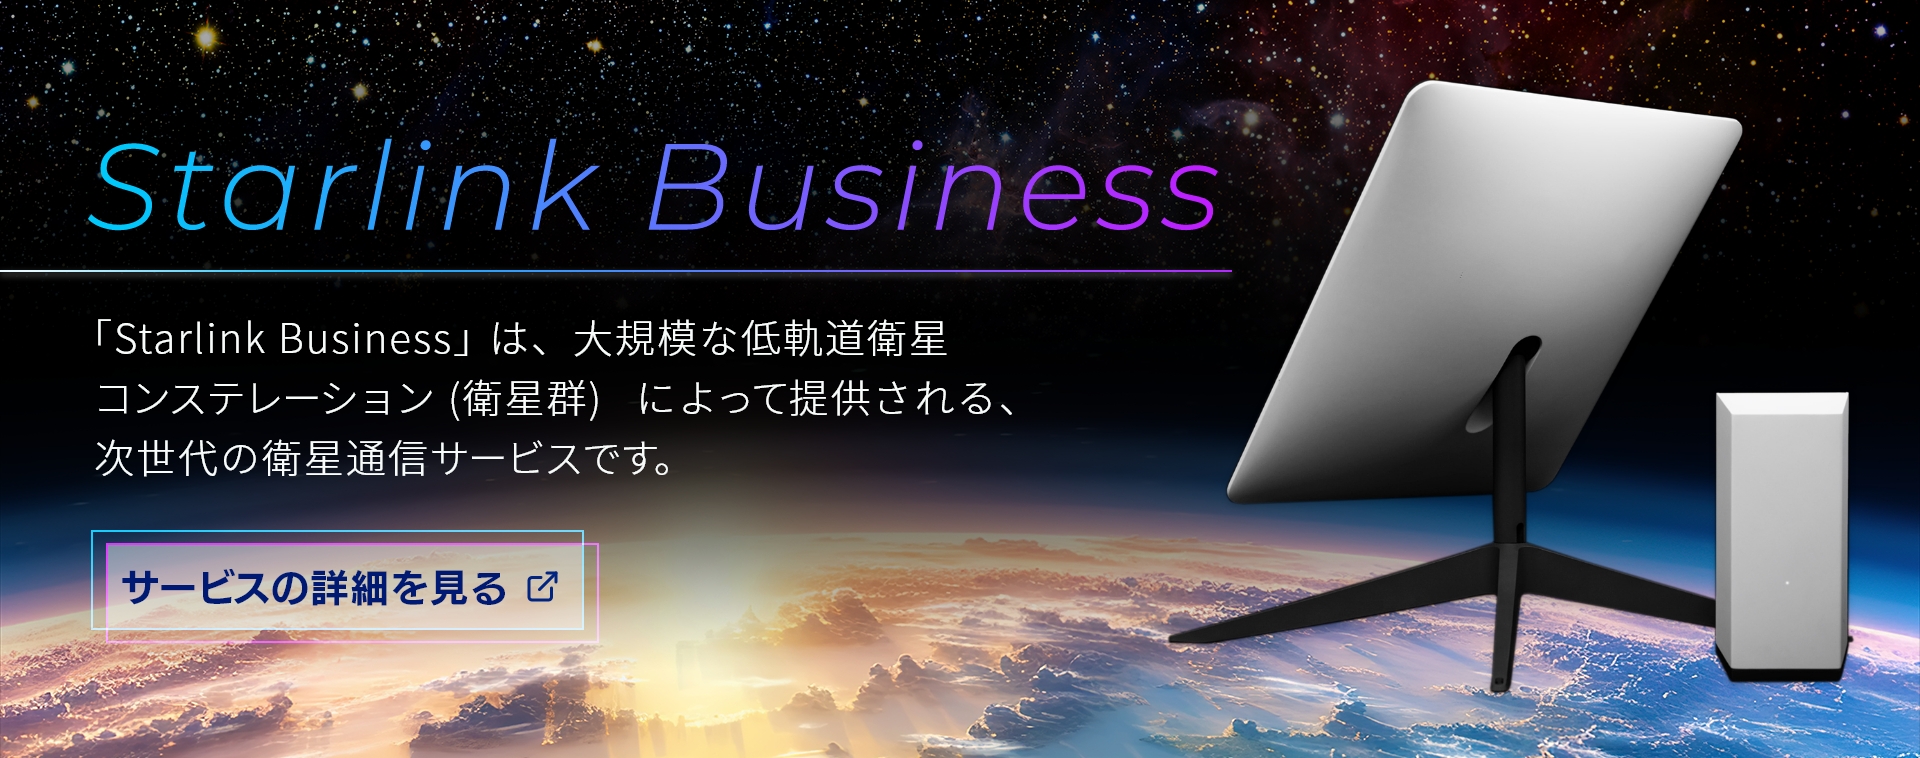 【KDDI】Starlink Business | 衛星通信・衛星電話/Starlink | 法人向け